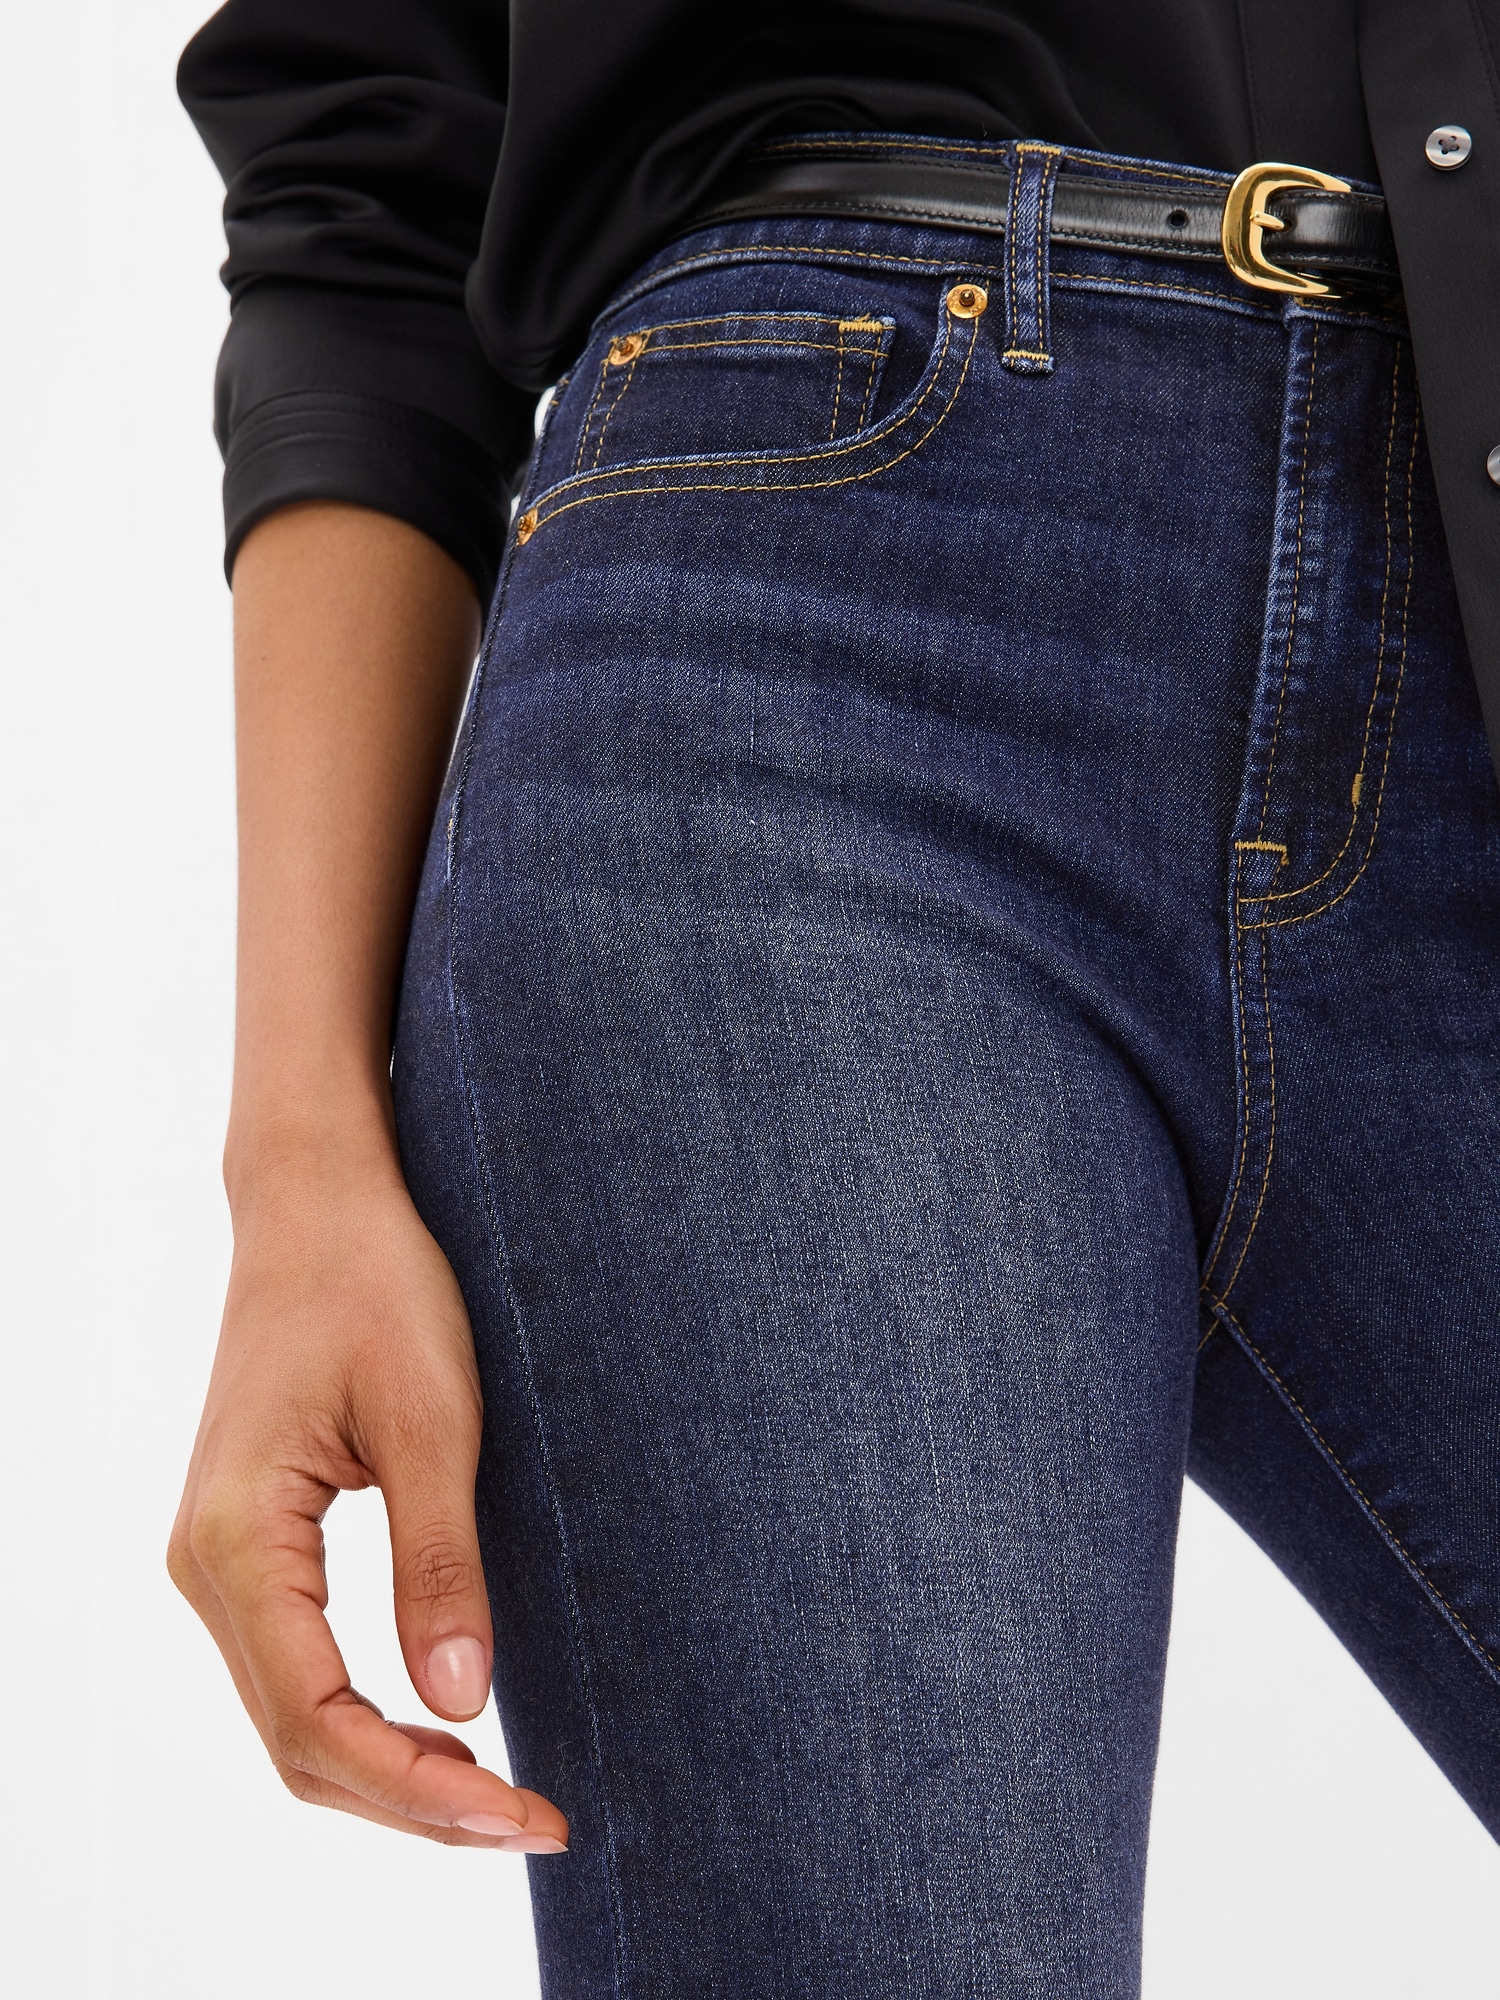 GAP, Jeans, Gap Womens True High Rise Skinny Jeans Black Denim 27 4r